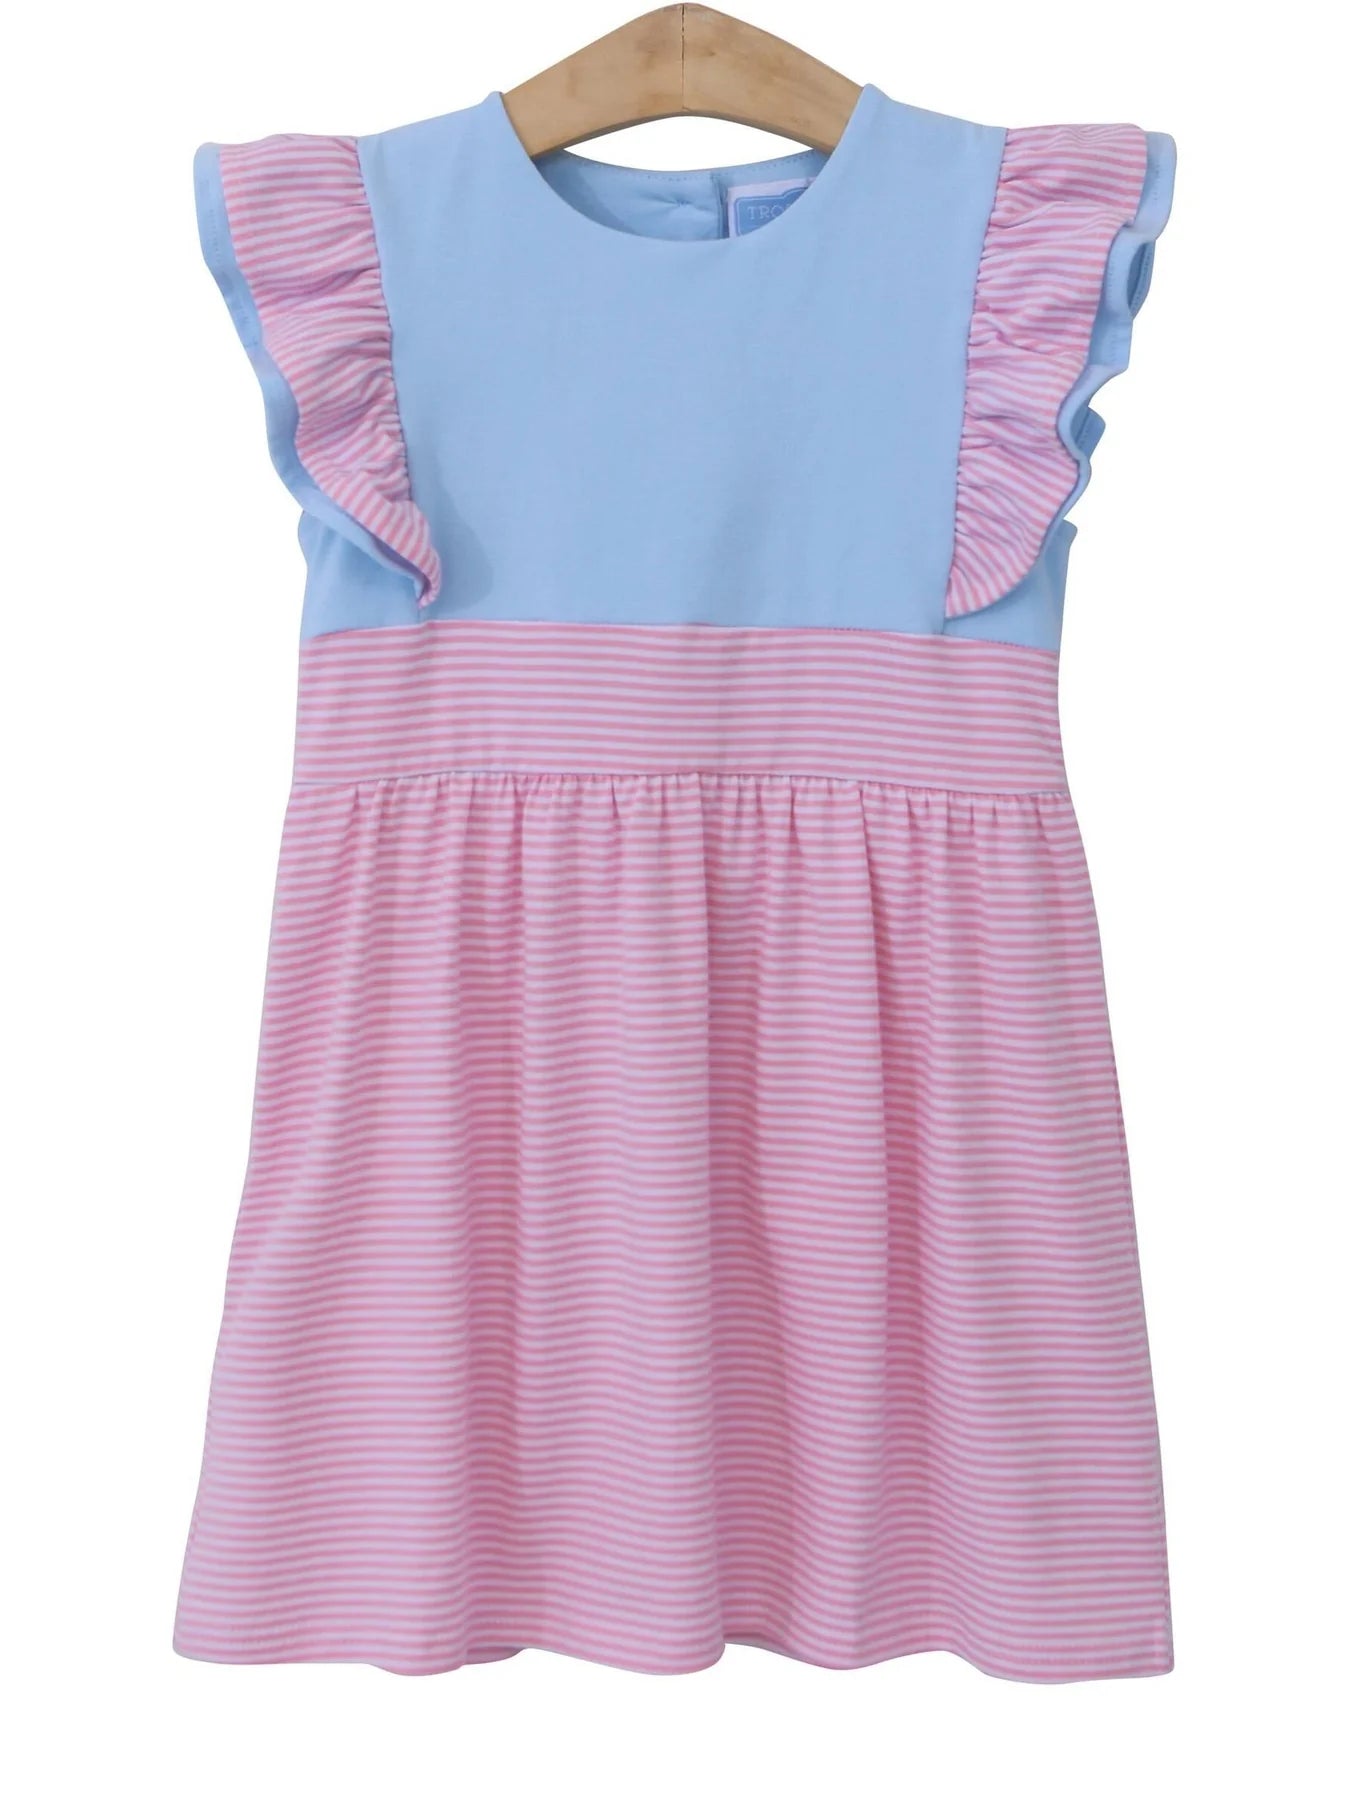 Light Pink Stripe & Light Blue Rosie Dress